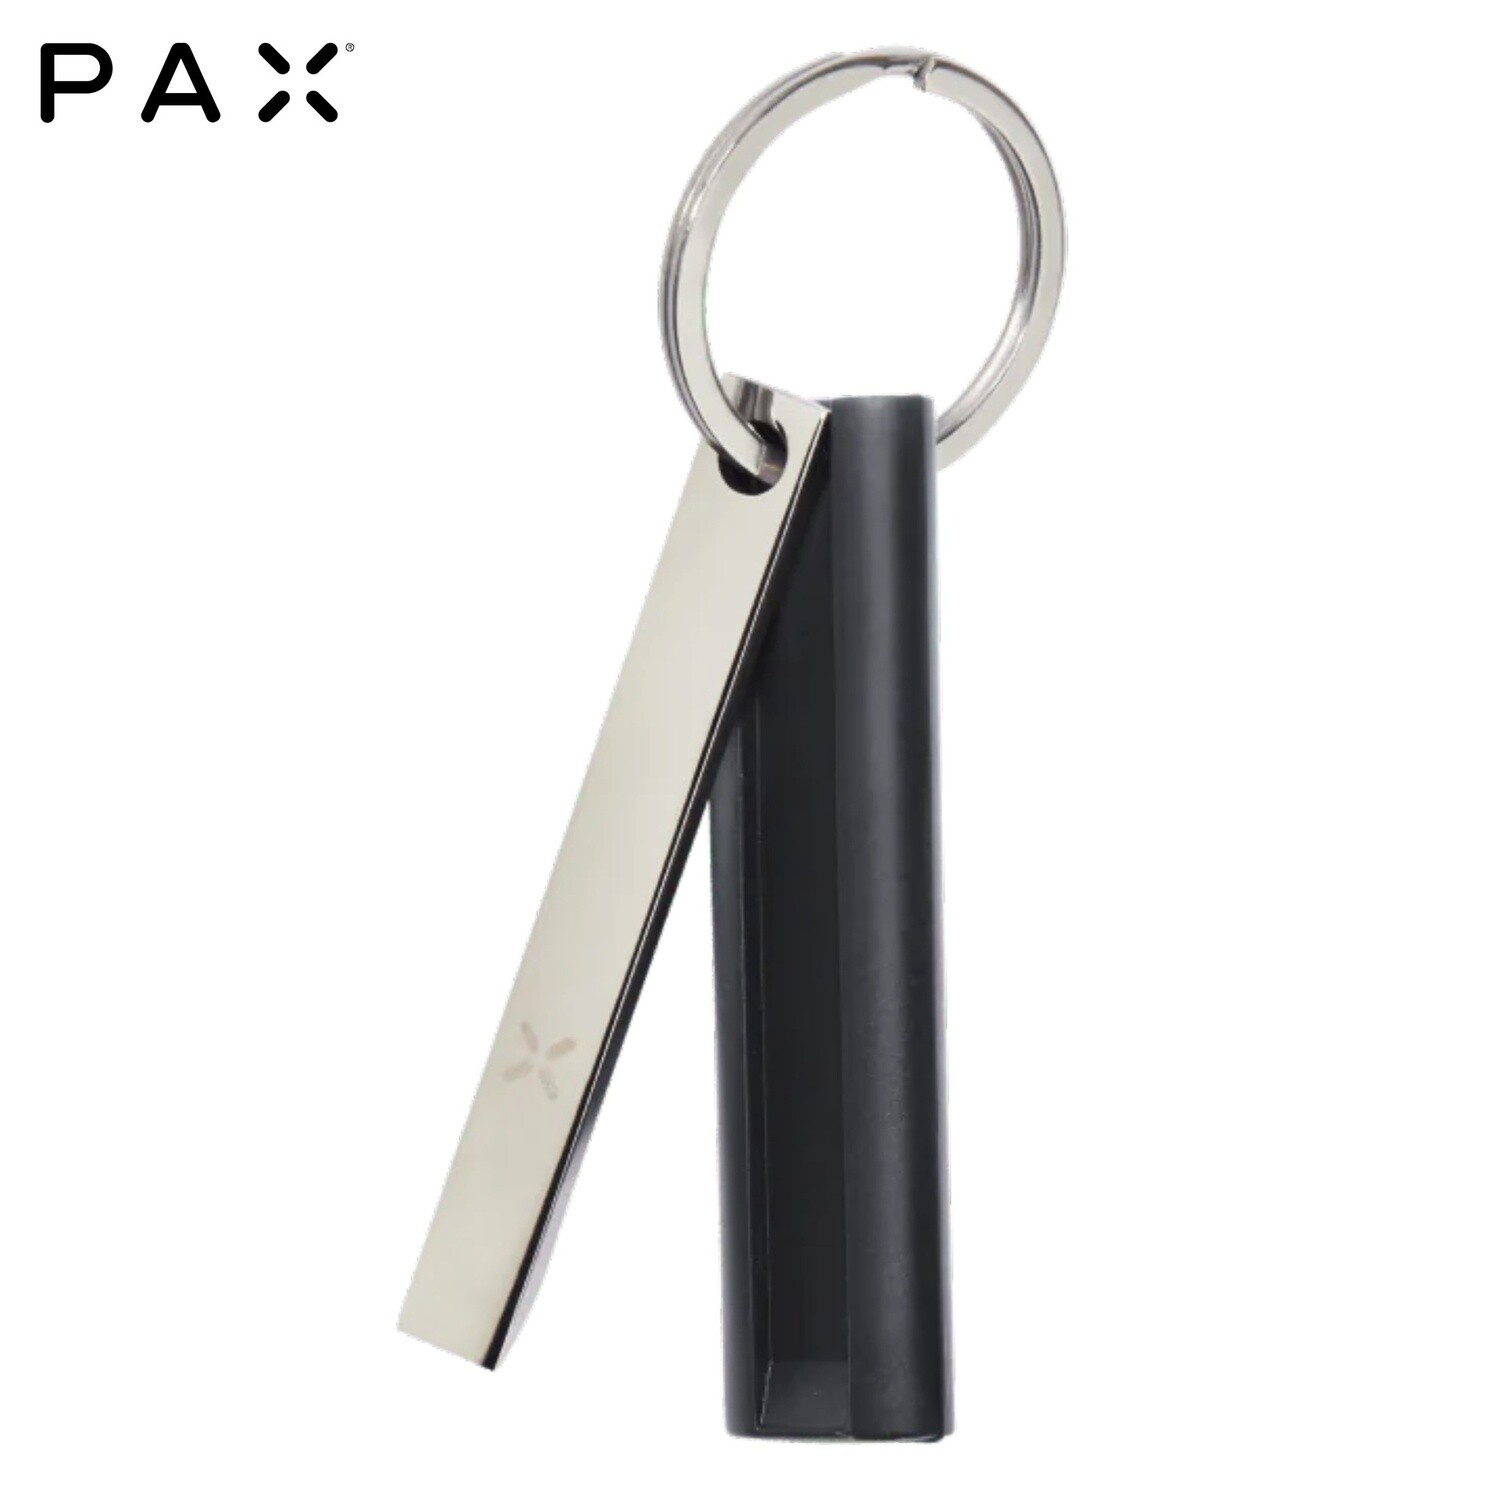 PAX® Multi-Tool